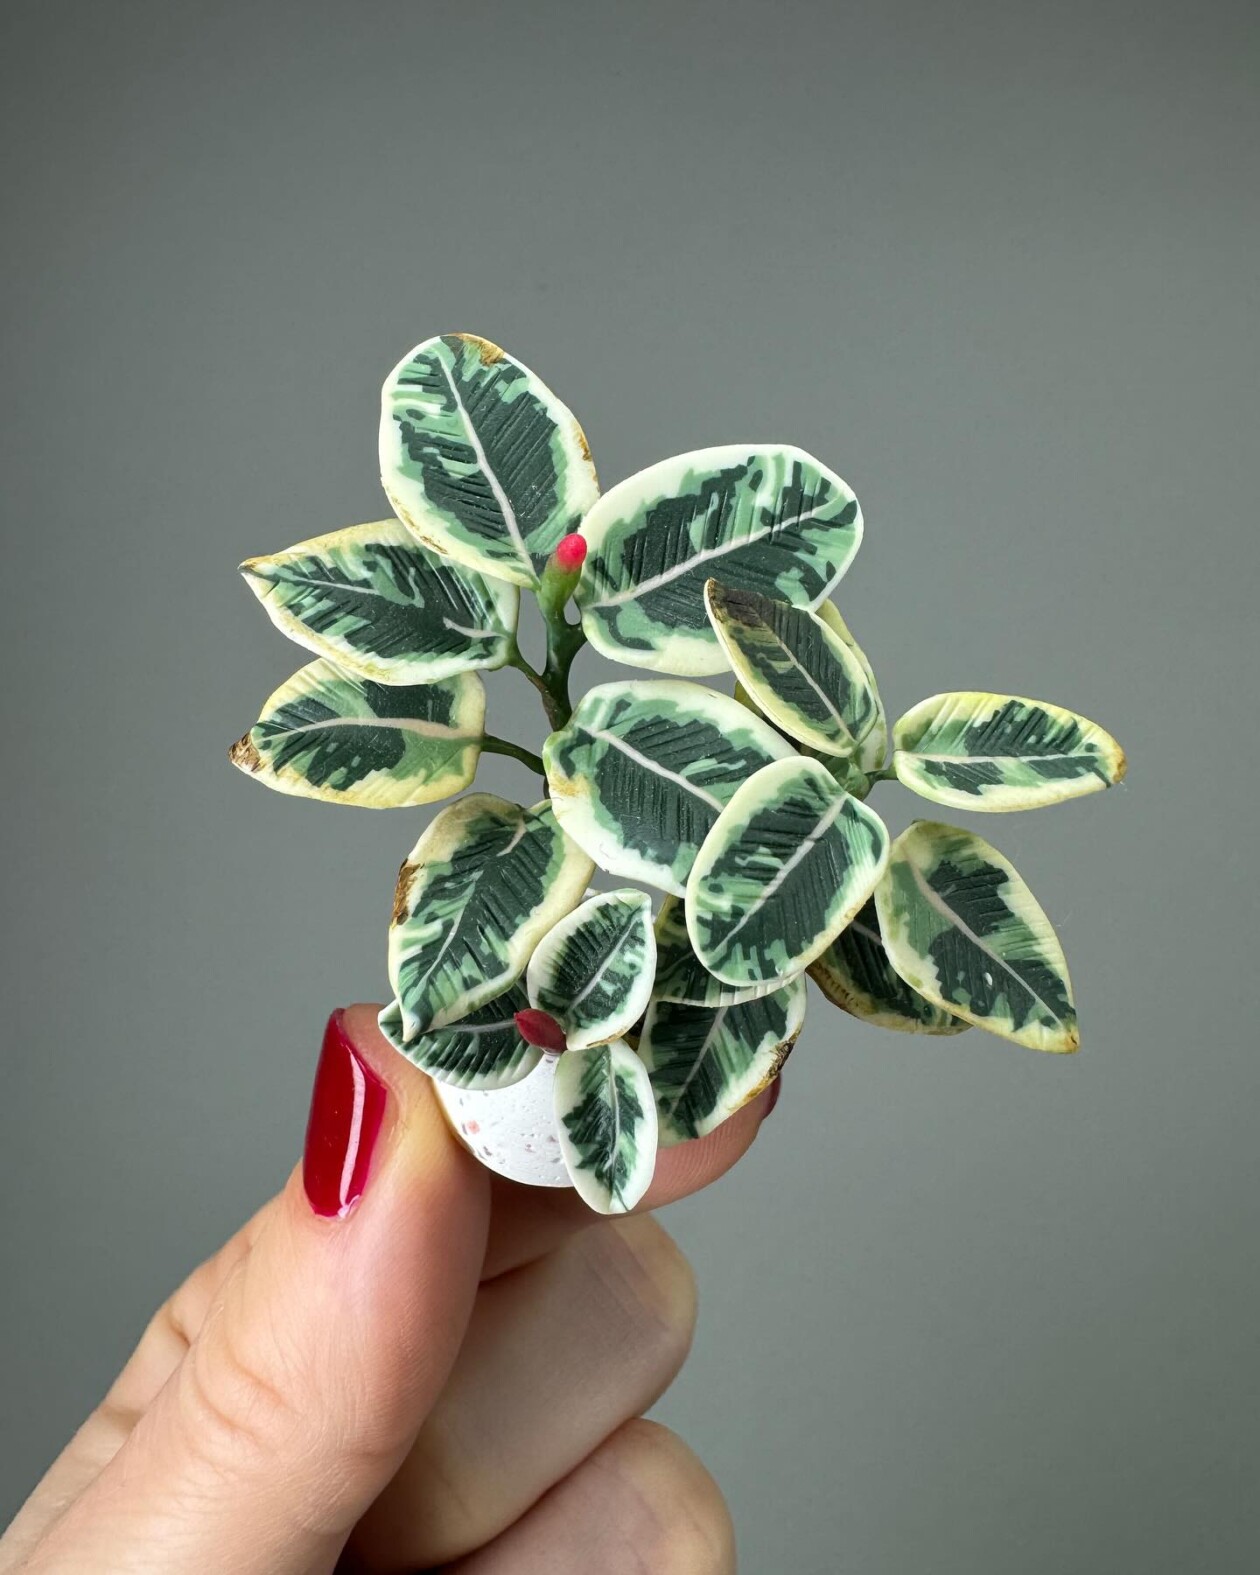 Handmade Miniature Polymer Clay Plants By Astrid Wilk (8)